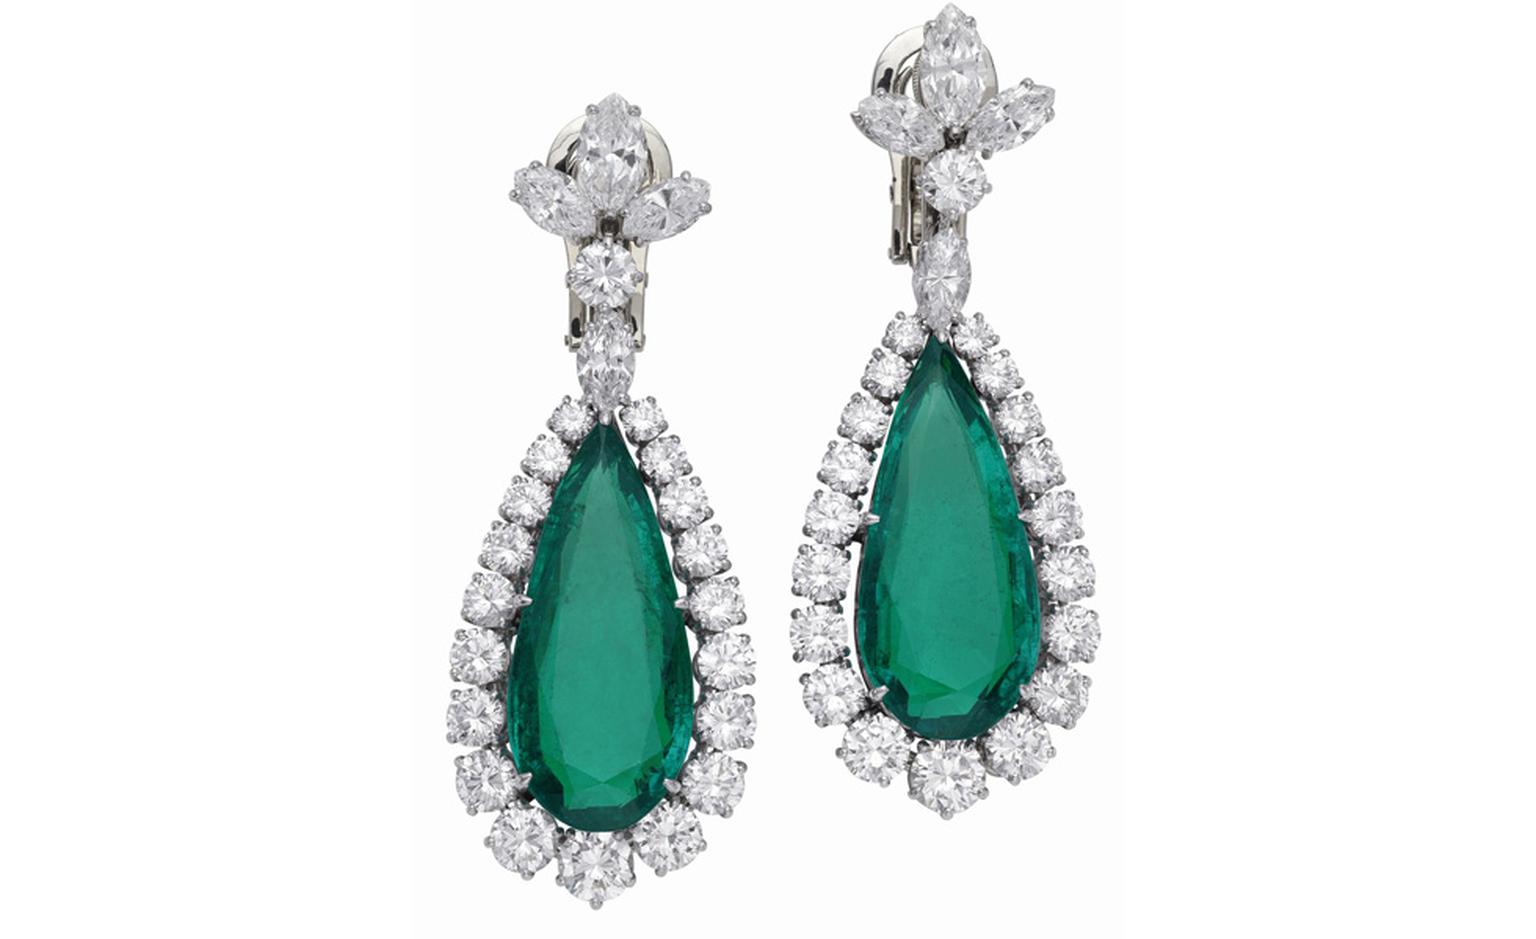 Bulgari Emerald earrings that were part 